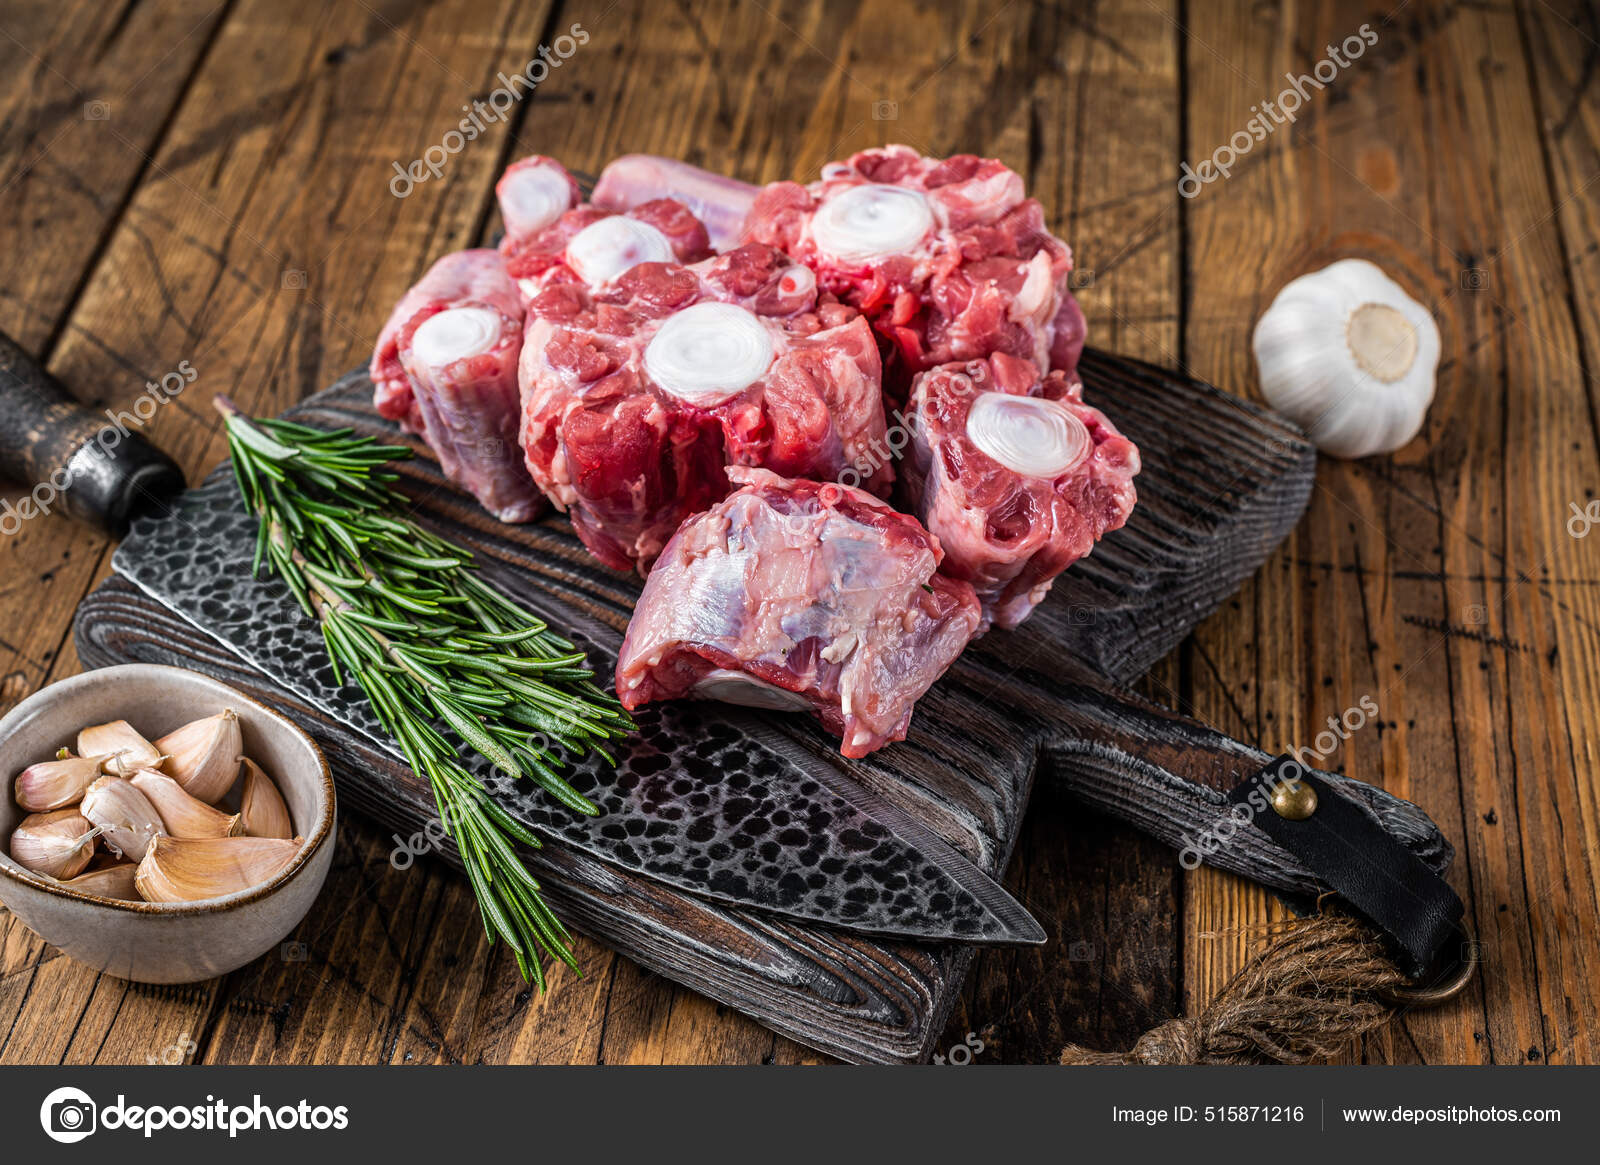 https://st.depositphotos.com/22628872/51587/i/1600/depositphotos_515871216-stock-photo-raw-beef-oxtail-cut-meat.jpg